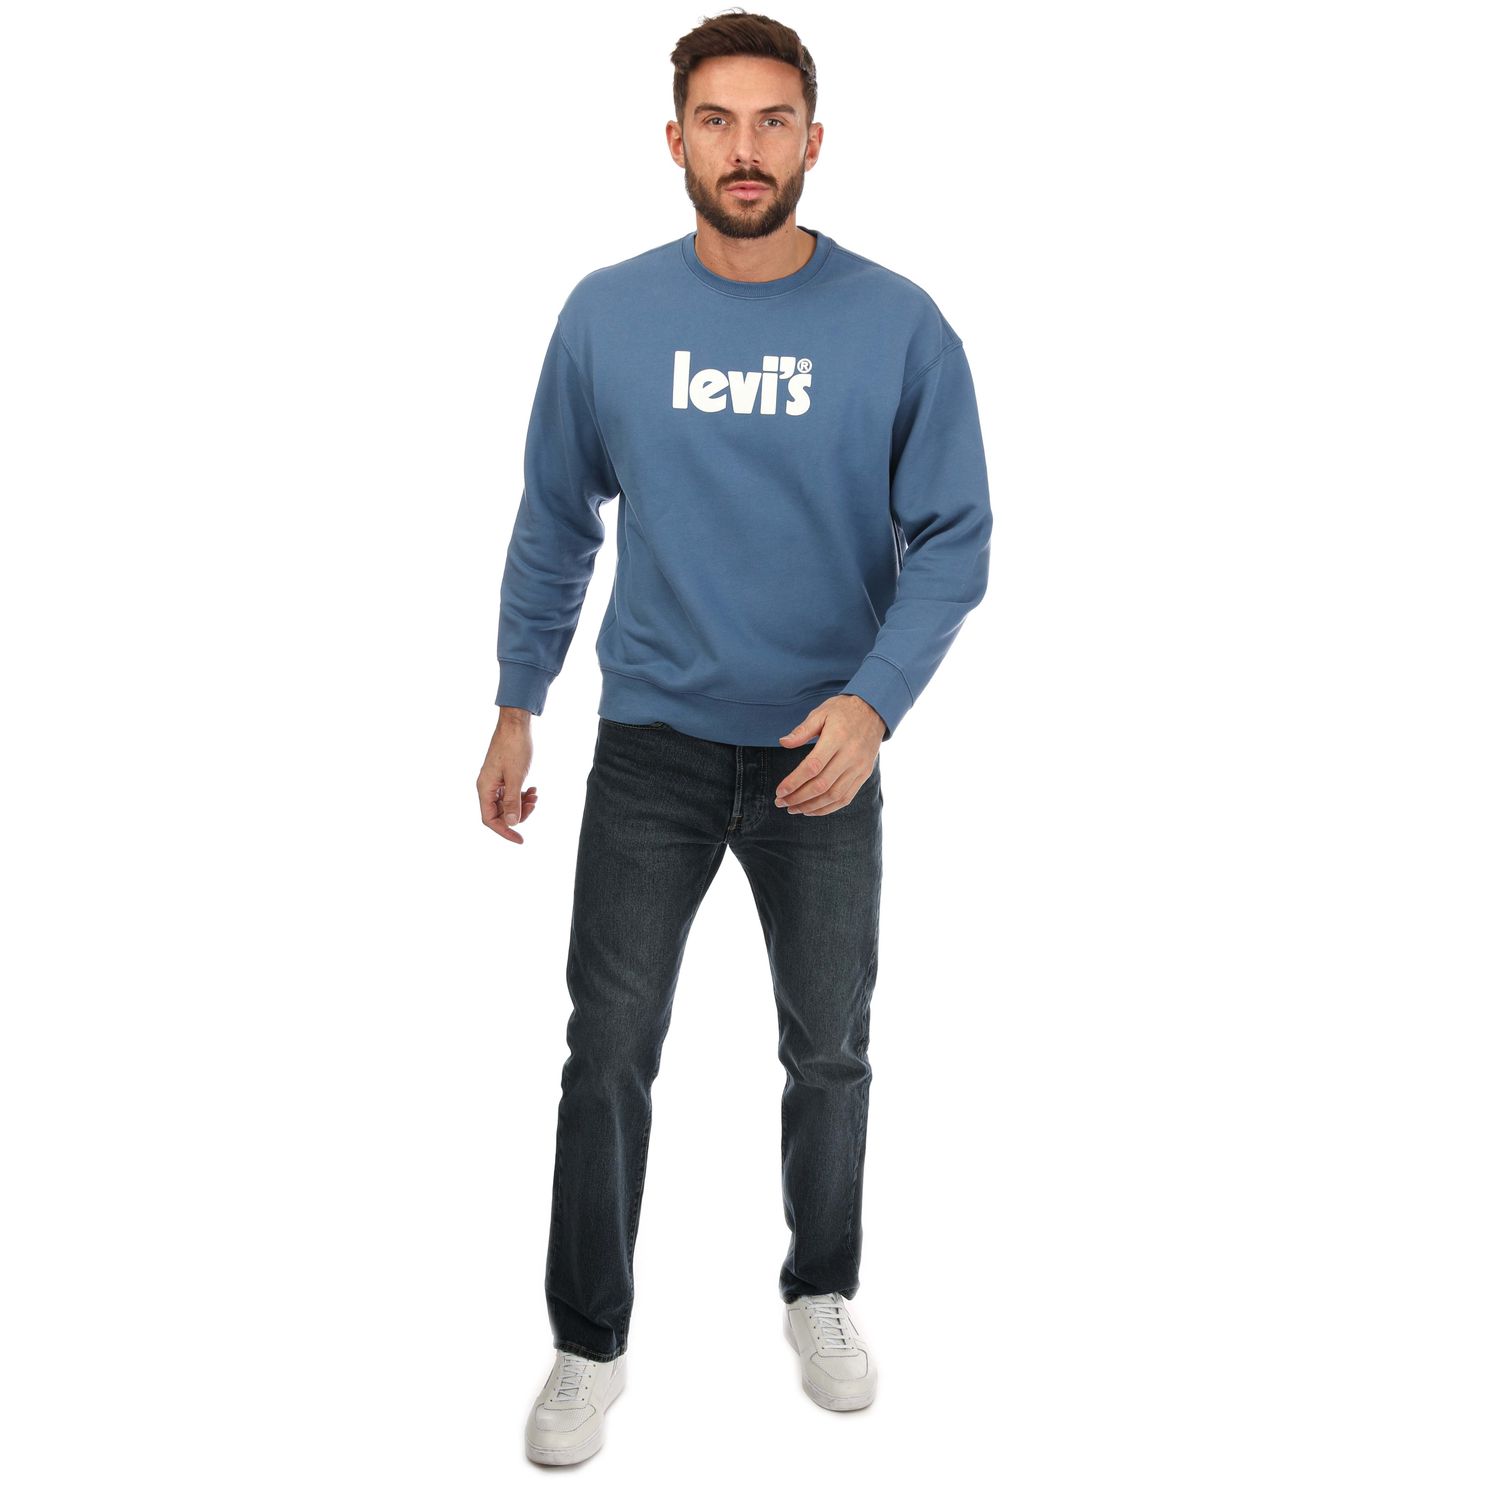 Levi's Men's Relaxed Graphic Crewneck Sweatshirt